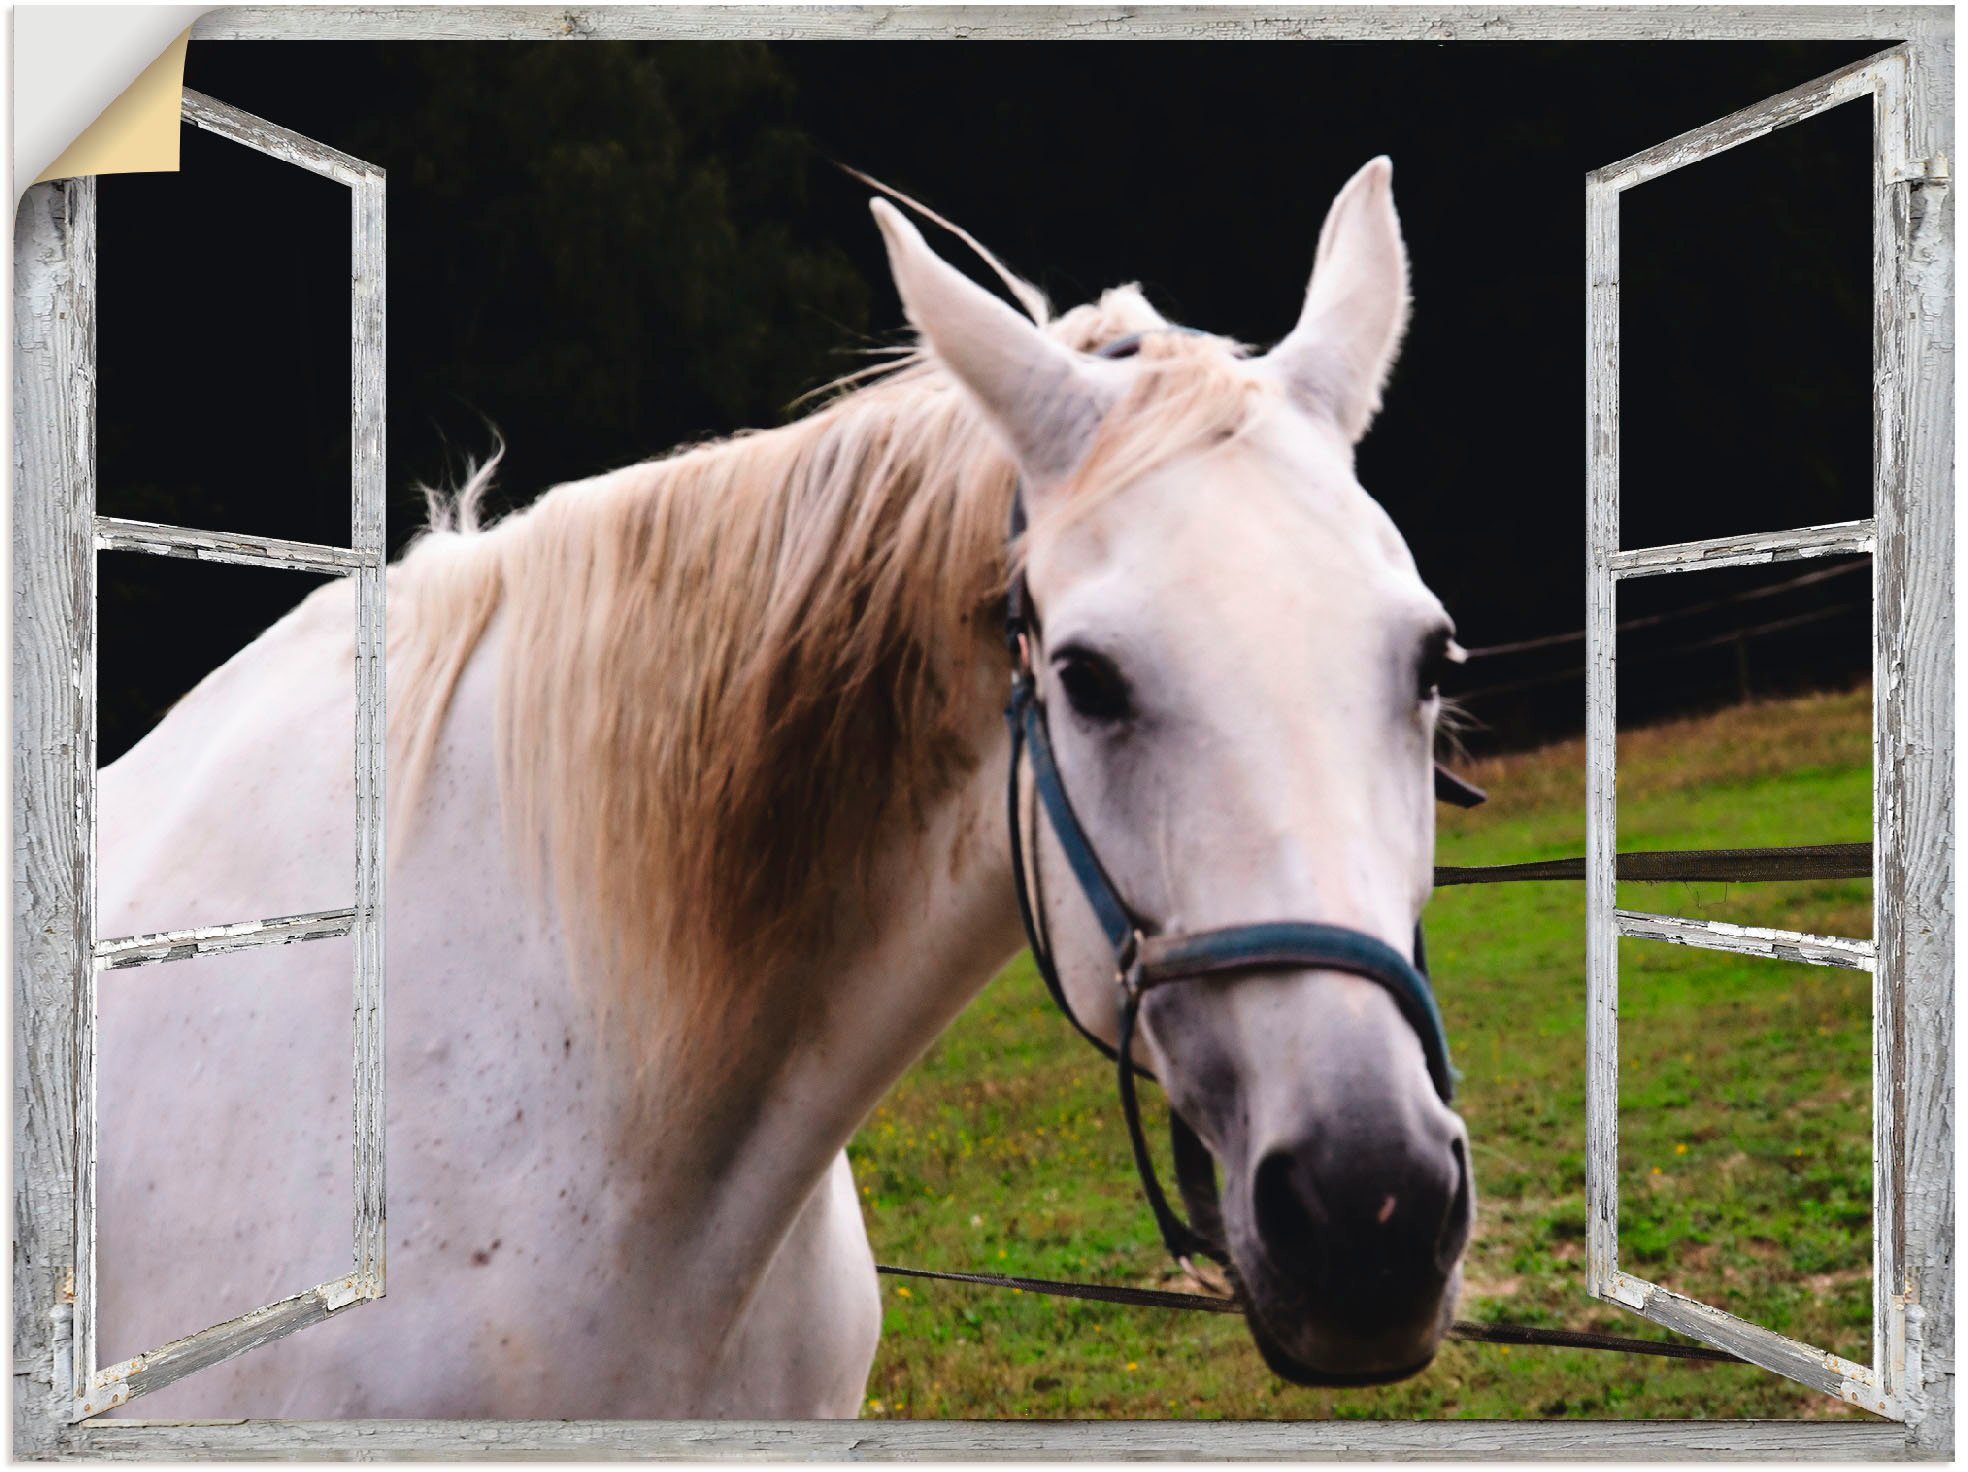 Artland Wandfolie Fensterblick - weisses Pferd, Haustiere (1 St), selbstklebend